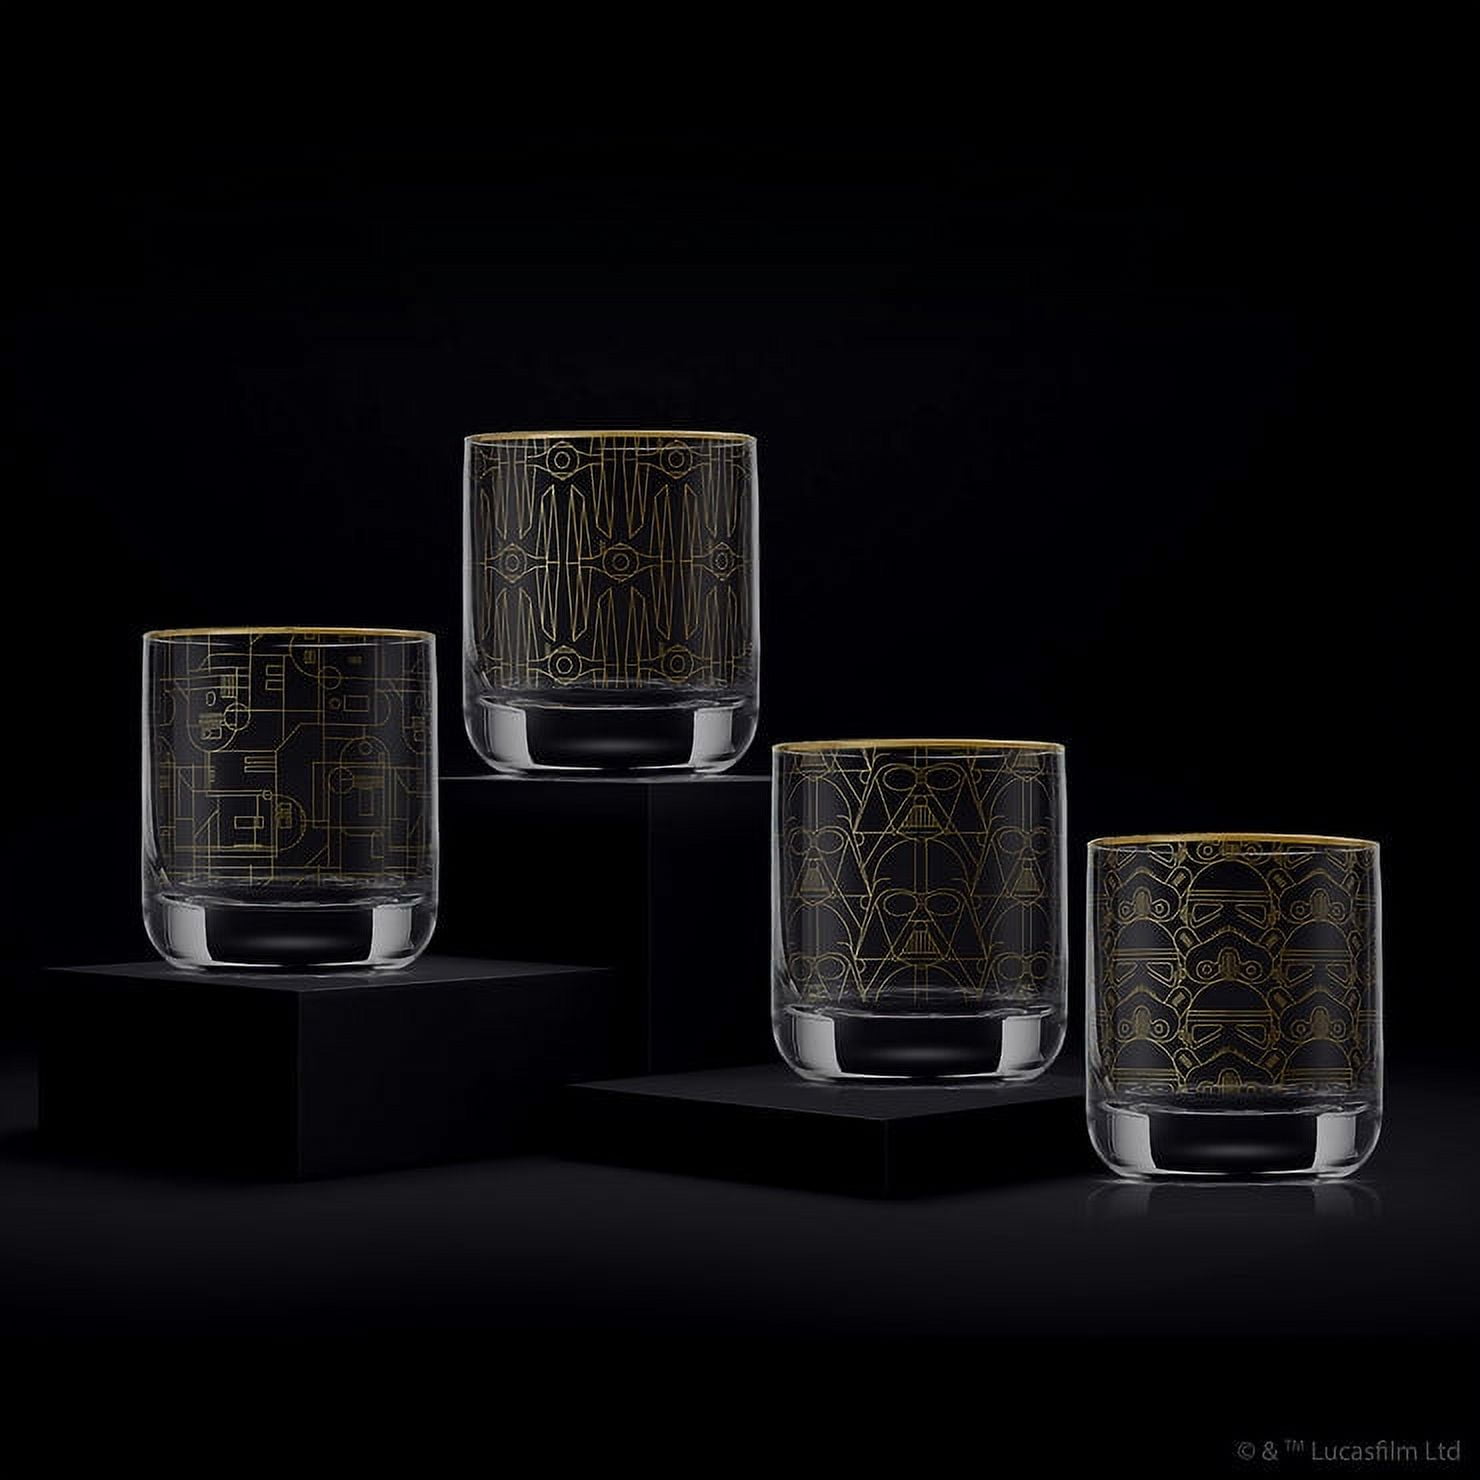 Star Wars Deco Tall Drinking Glass - 13.5 oz - Set of 4, 14.2 oz - Fred  Meyer